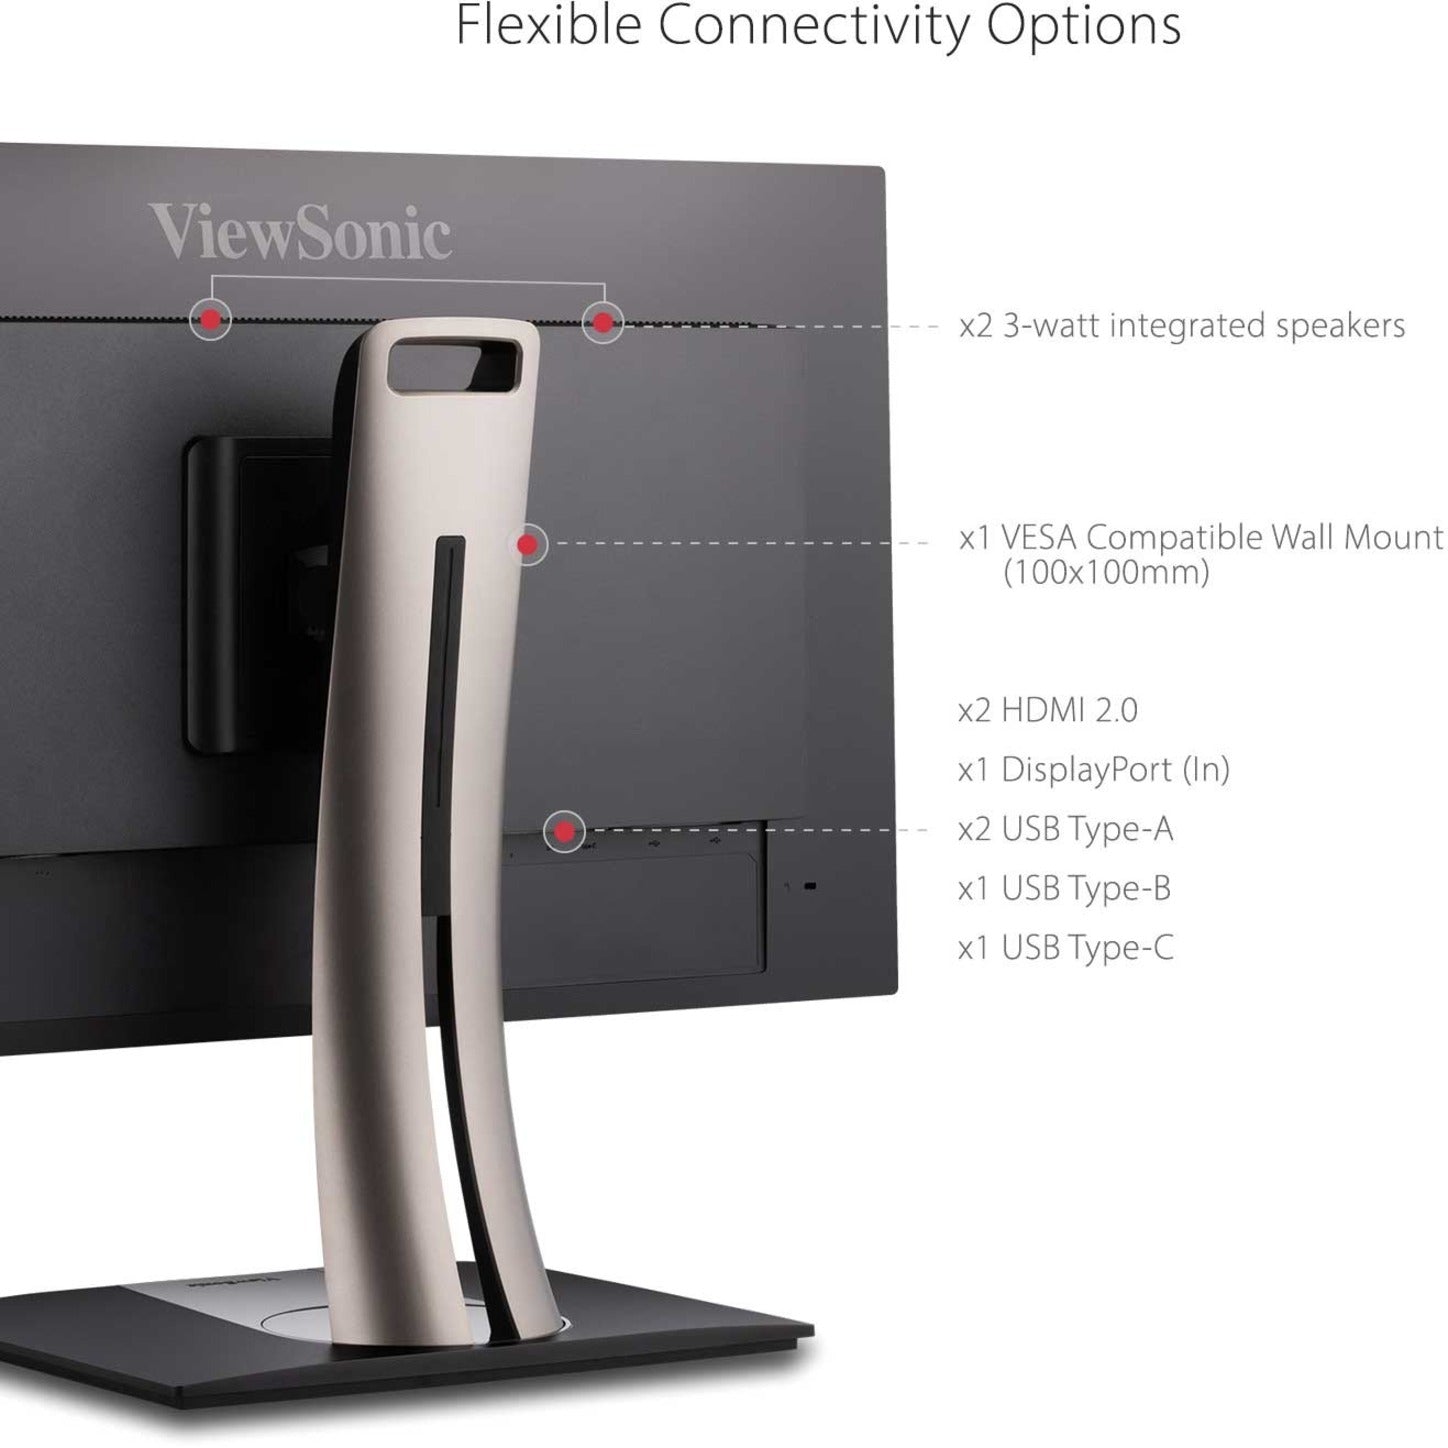 ViewSonic VP3256-4K ColorPro 32" 4K UHD Professional Graphic Design Monitor with USB-C (90W), Pantone Validated